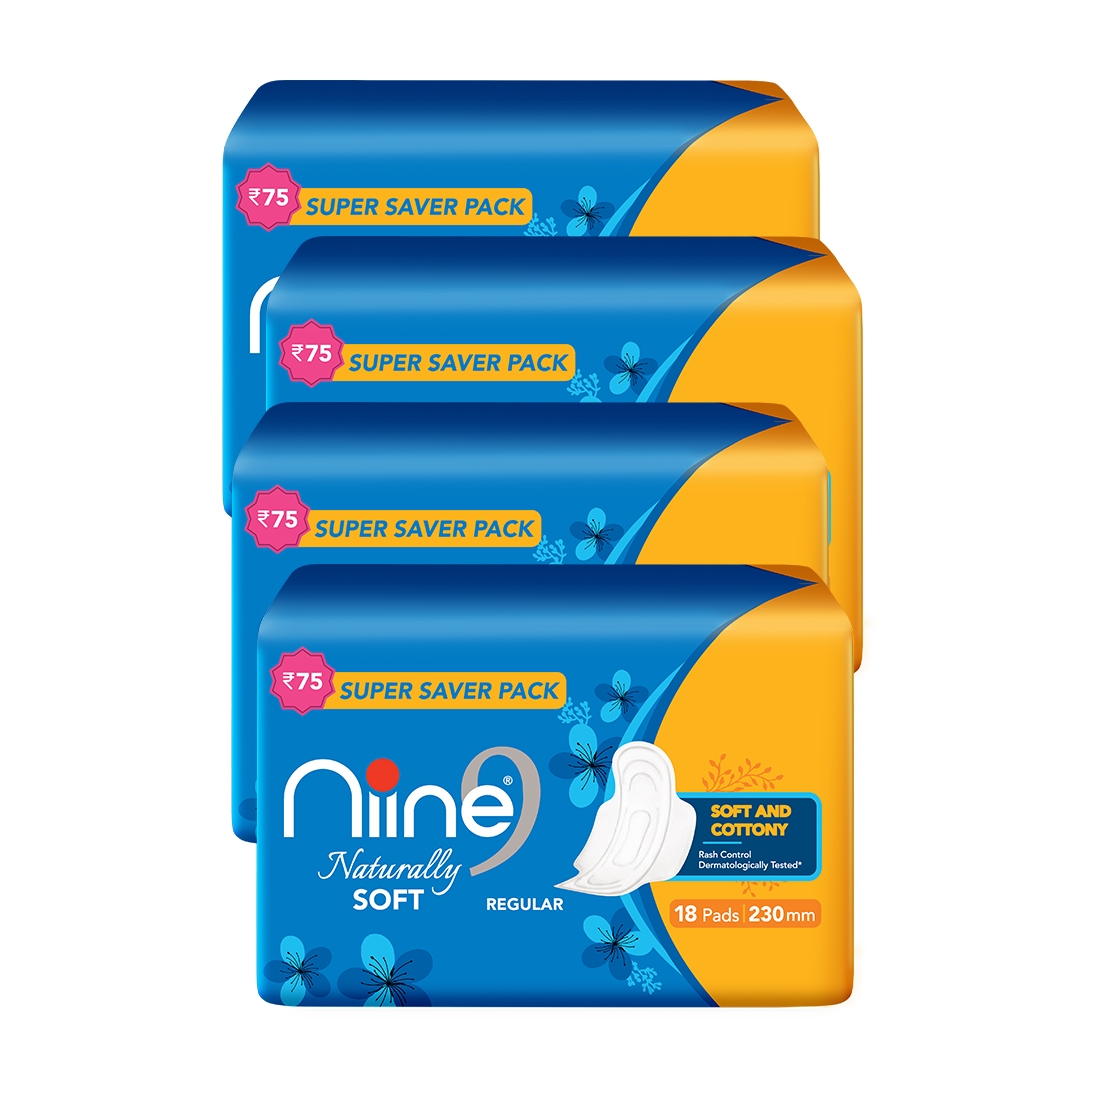 NIINE | Niine Naturally Soft Regular SUPER SAVER PACK Sanitary Napkins for Women